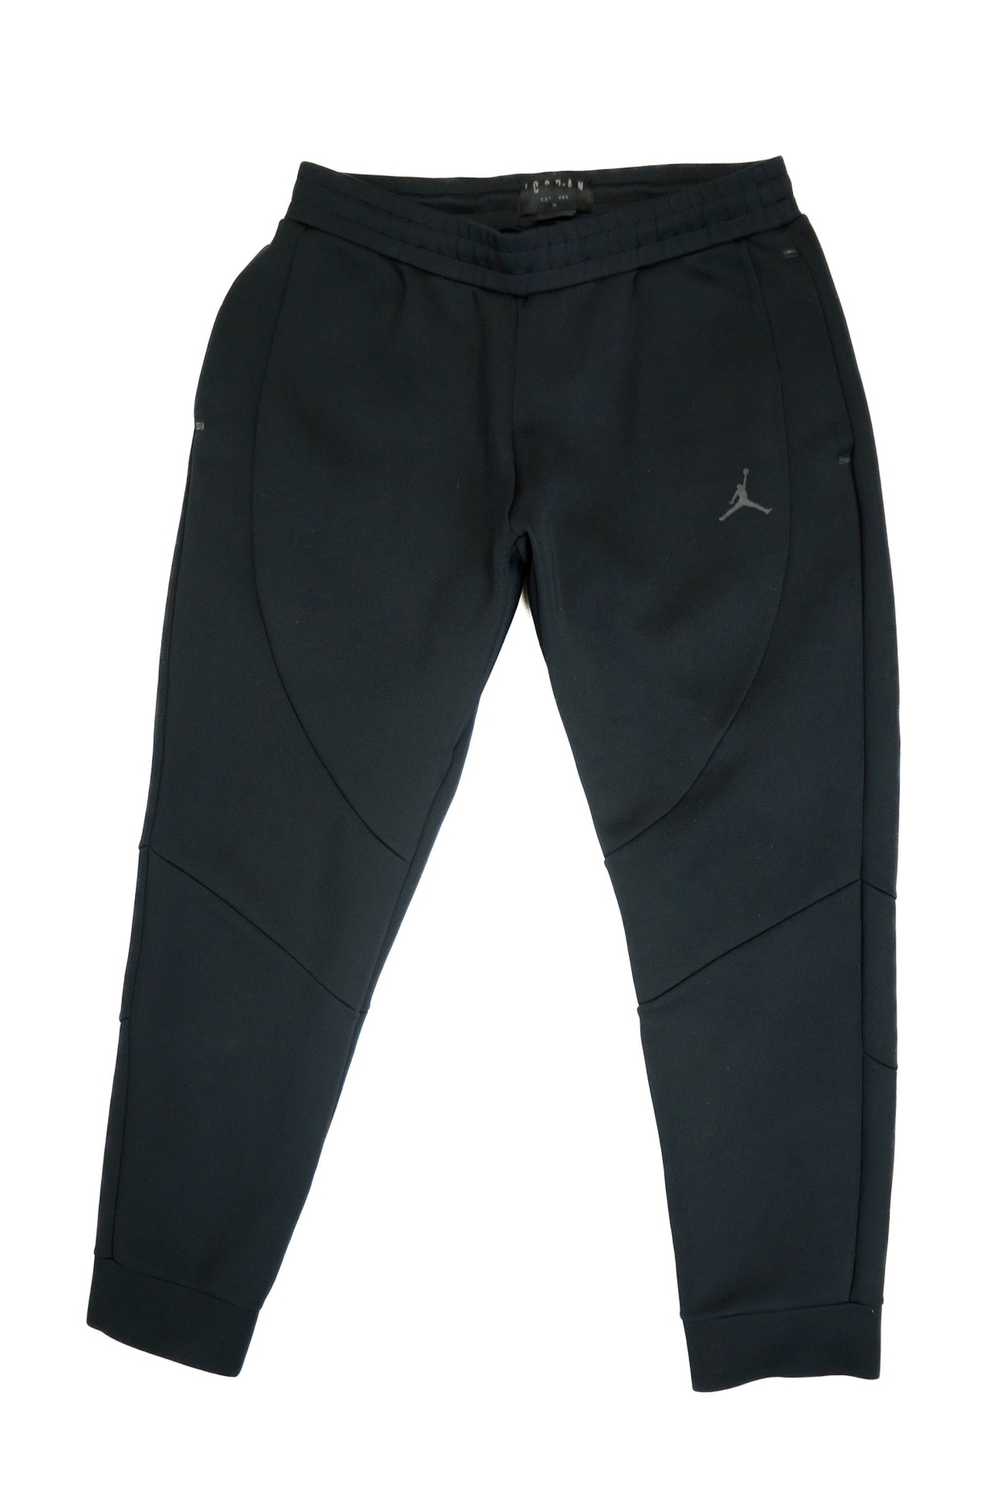 Jordan Brand × Nike JORDAN Track Pants Black - image 5